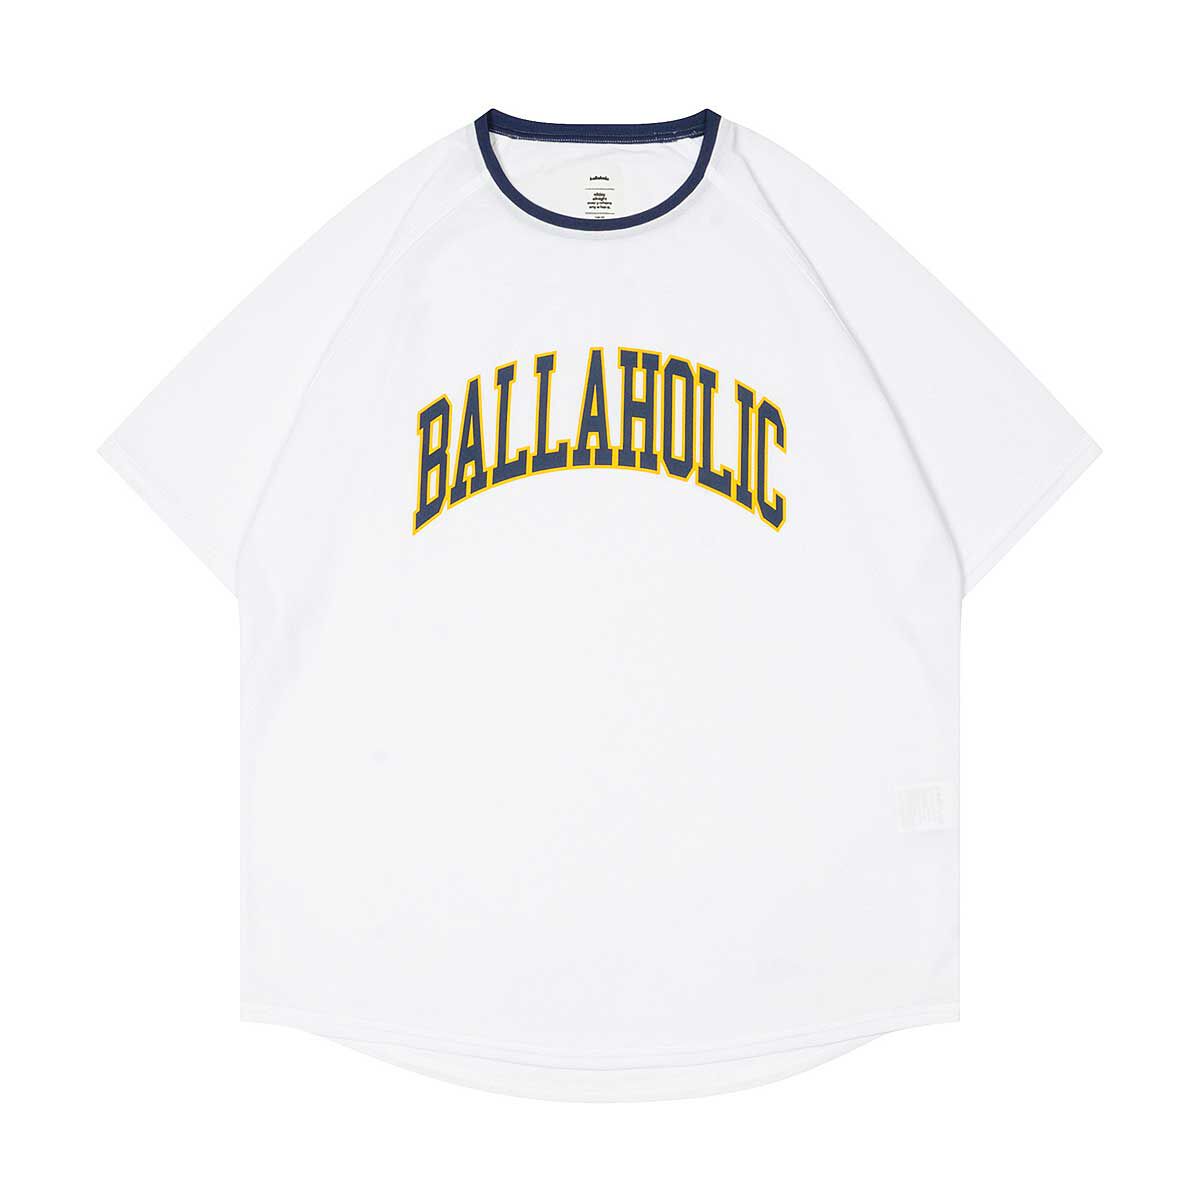 Image of Ballaholic College Logo Cool T-shirt, White / Dark Blue